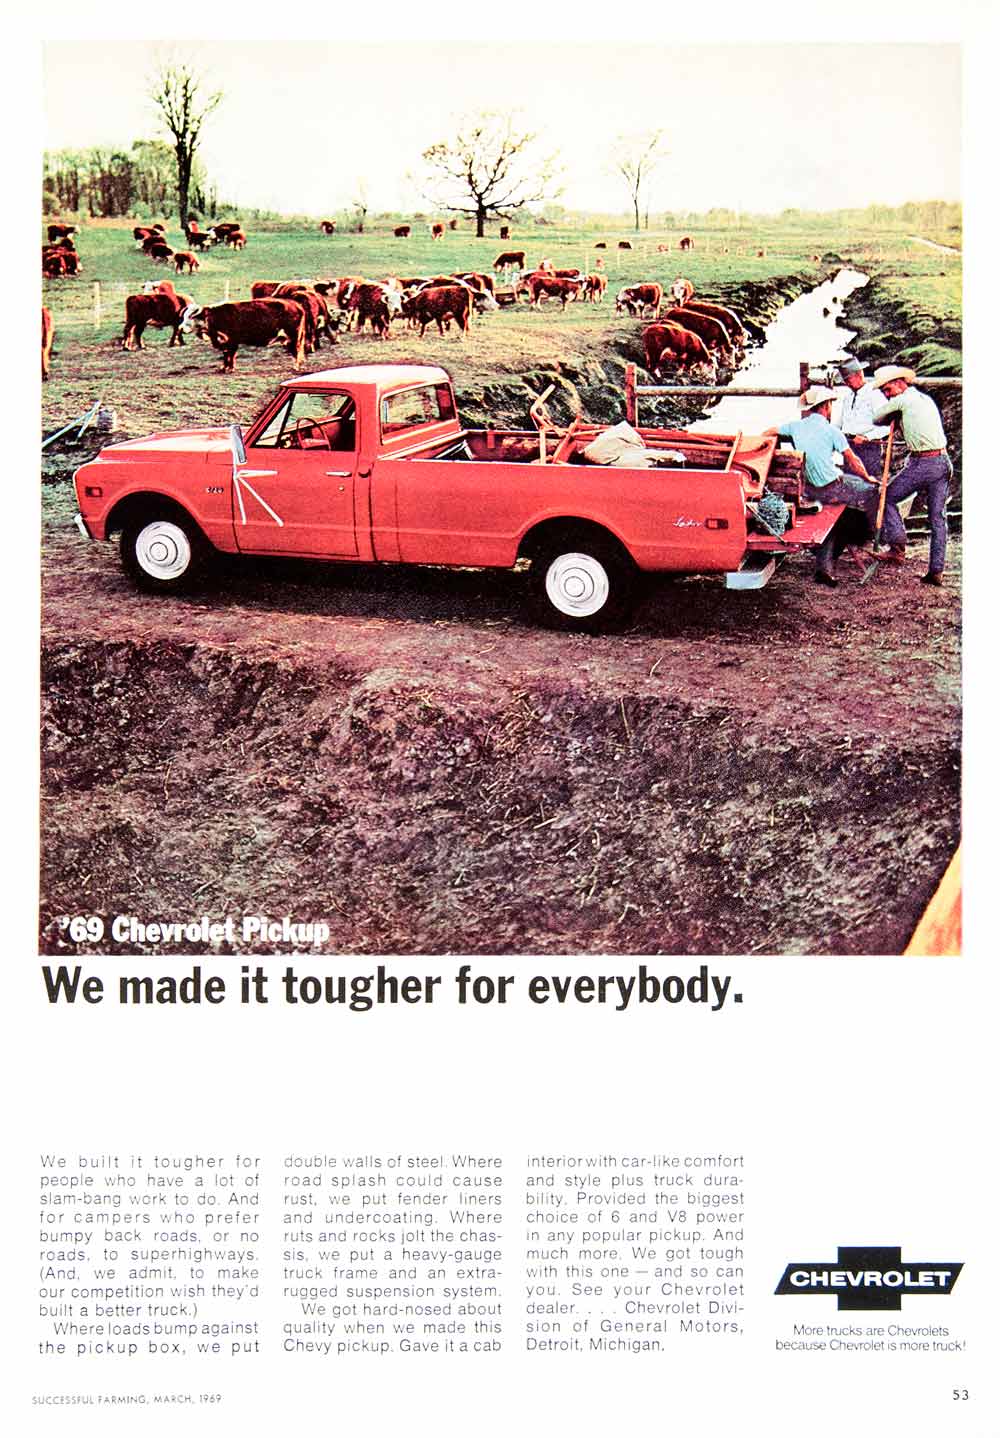 1969 Ad Chevrolet Pickup Truck General Motors Detroit Michigan Livestock SF1